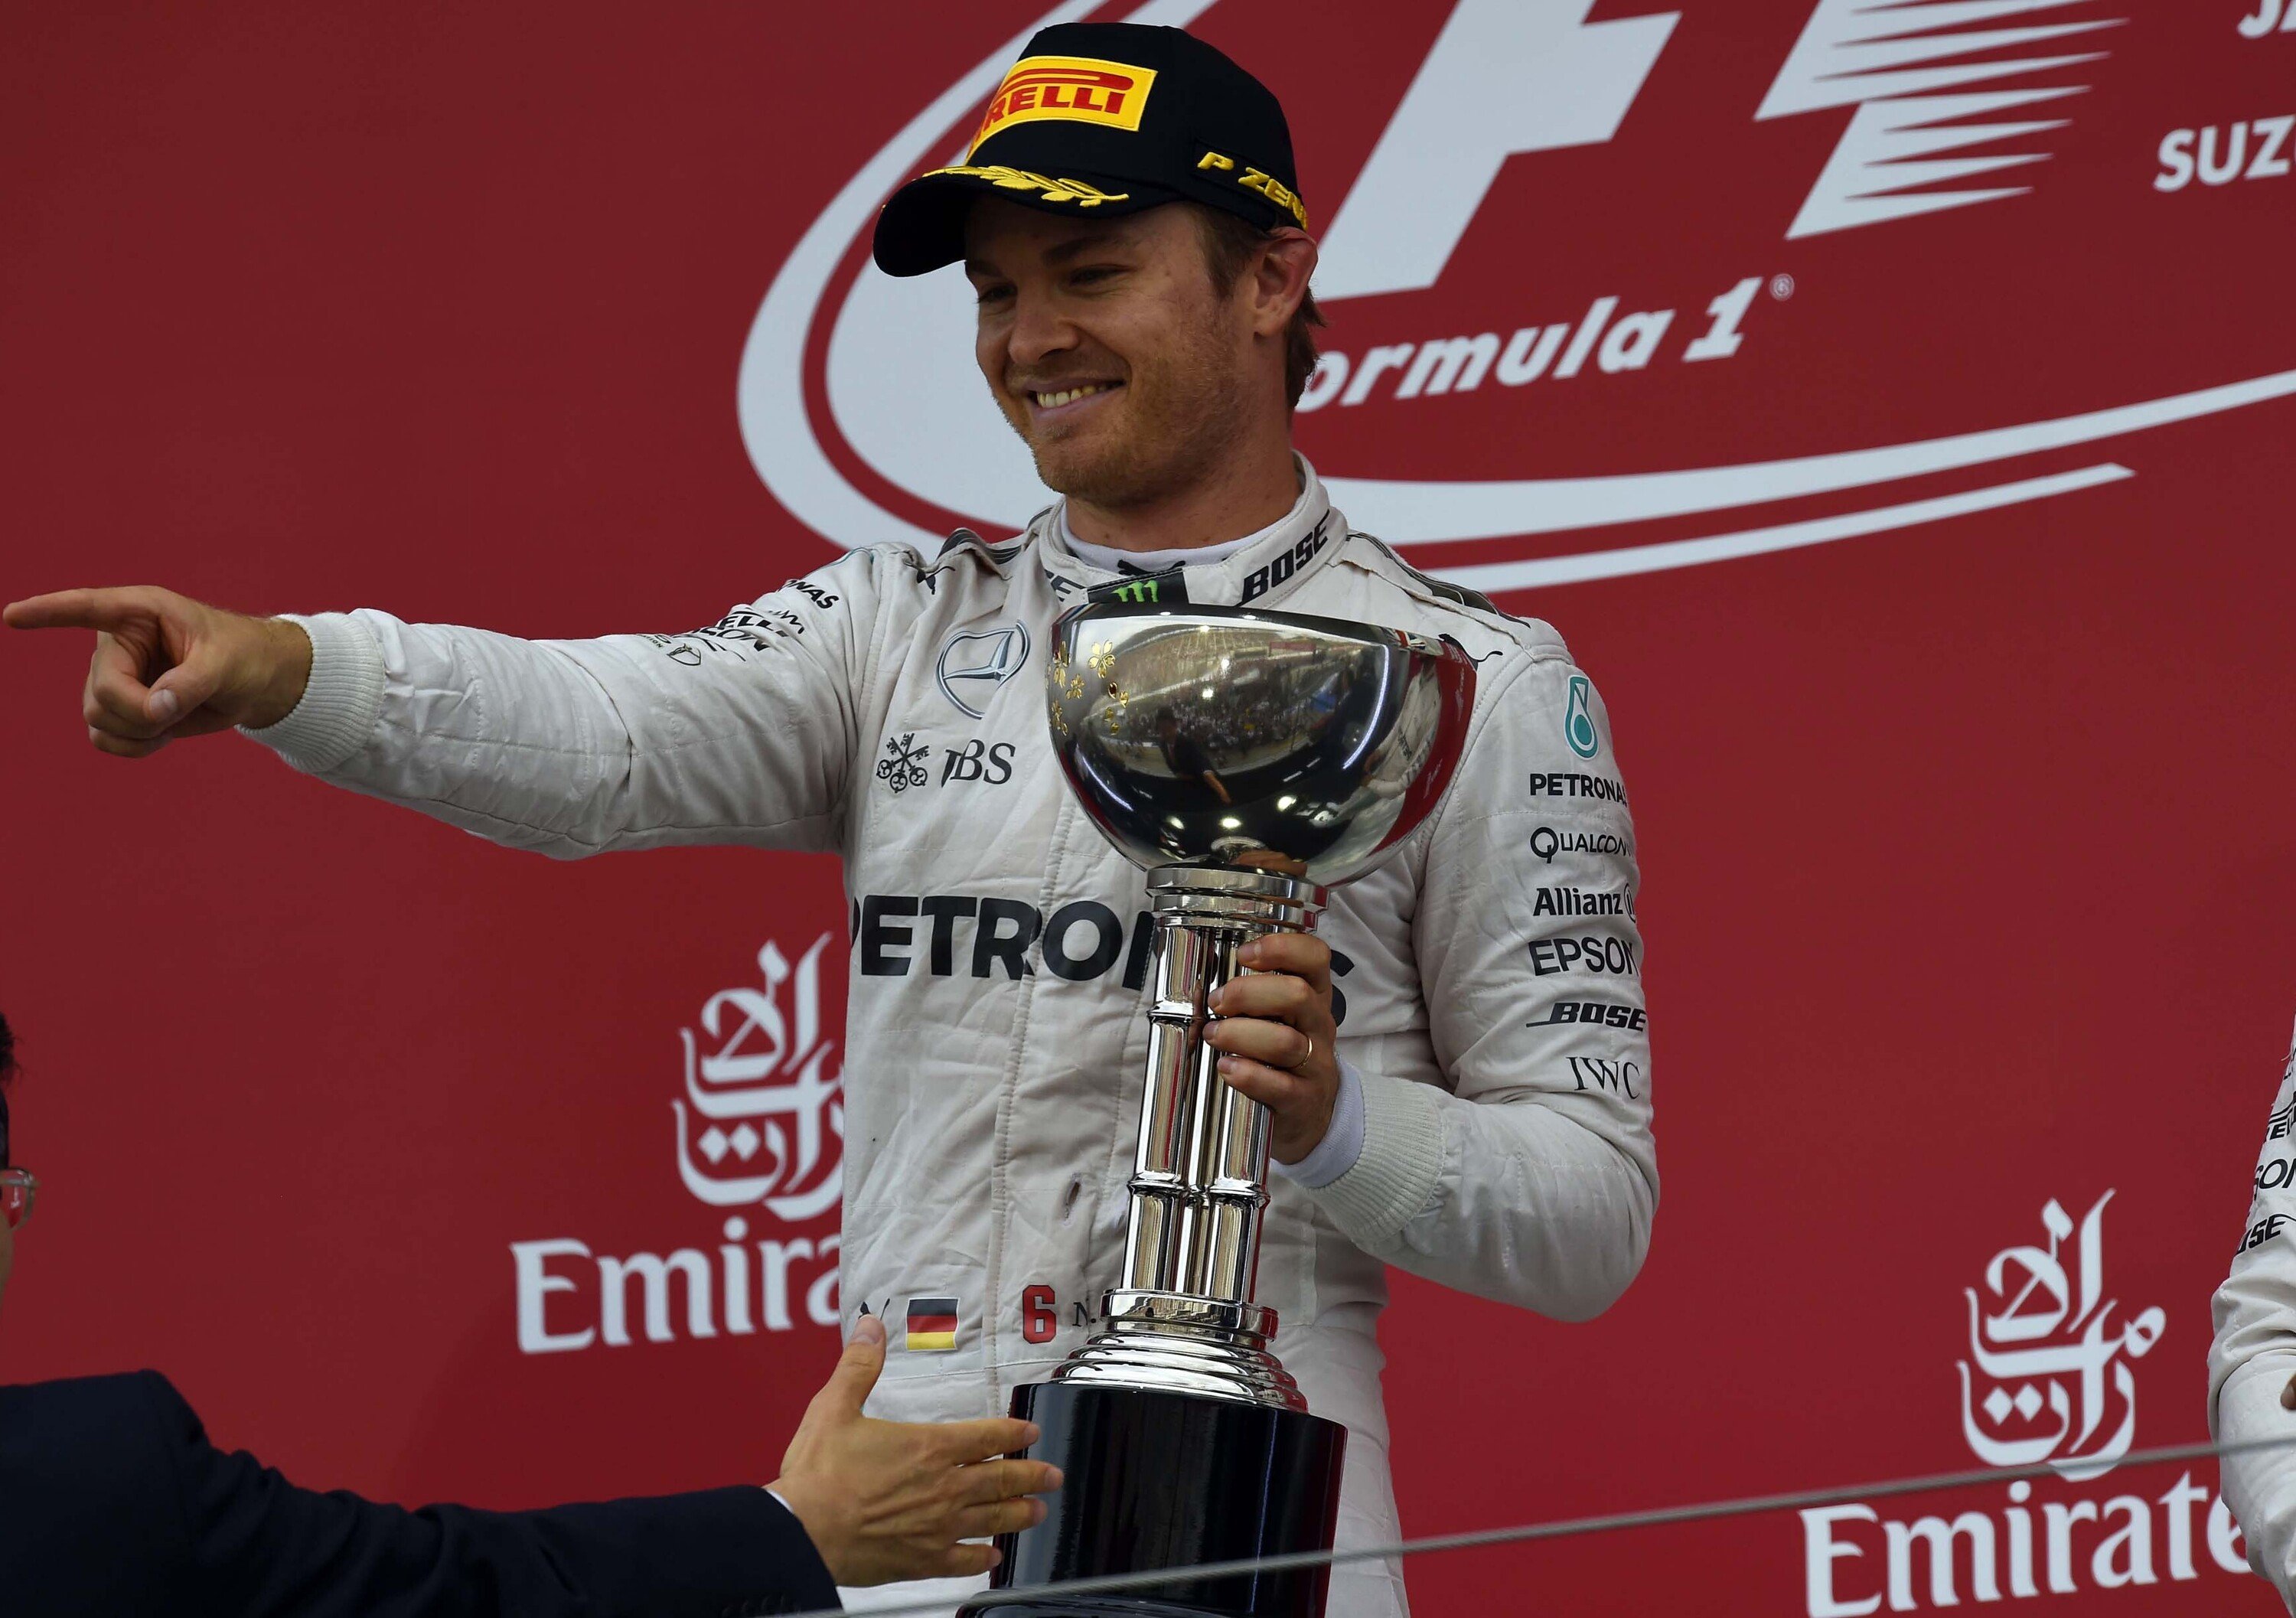 F1, le reazioni al ritiro di Rosberg